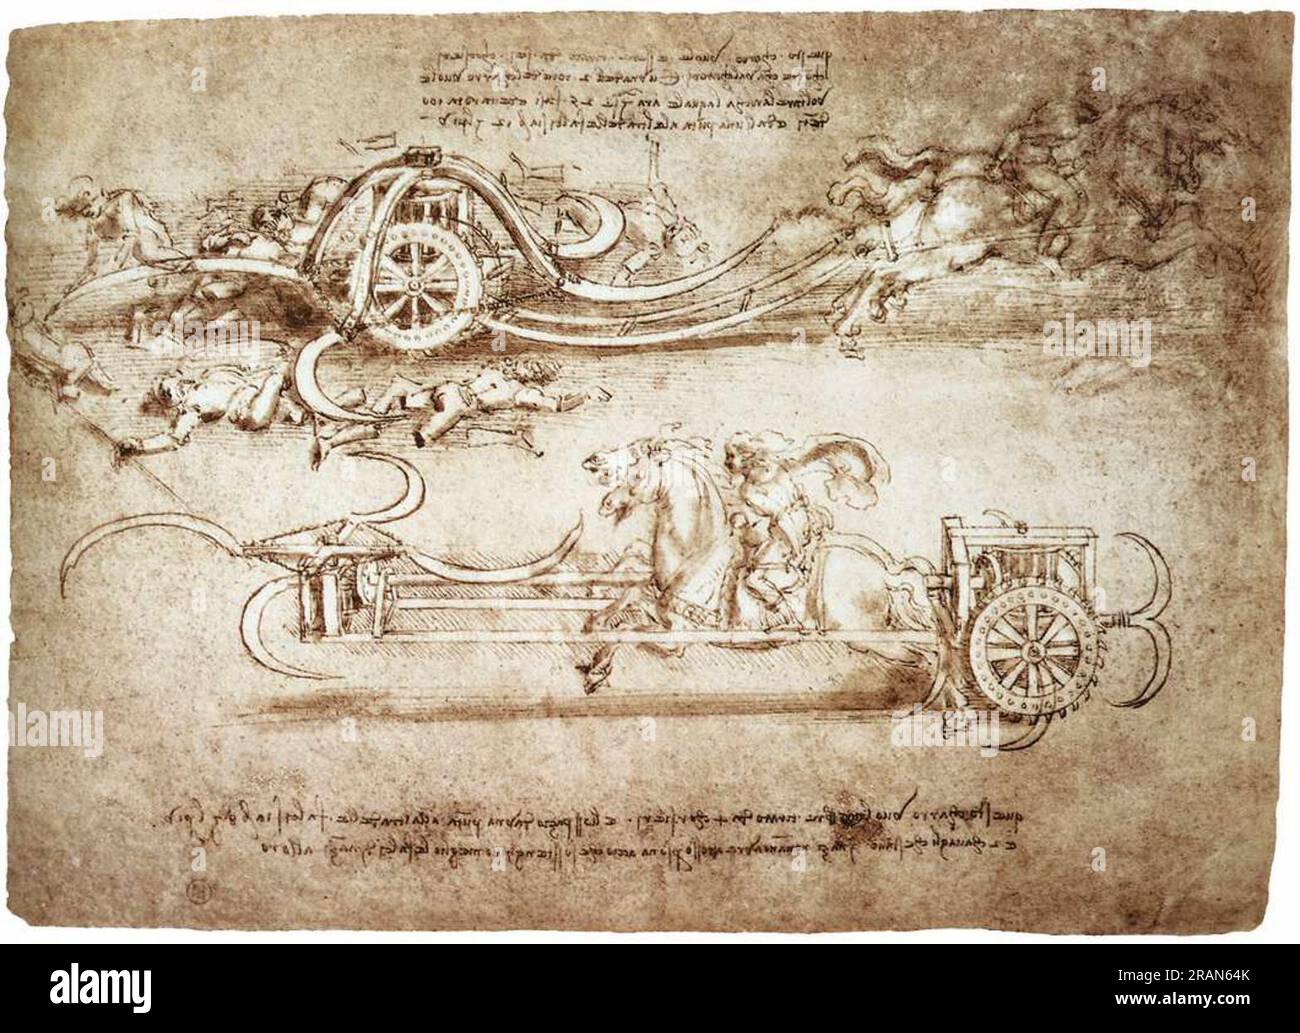 Scythed Chariot c.1483; Milan, Italy by Leonardo da Vinci Stock Photo